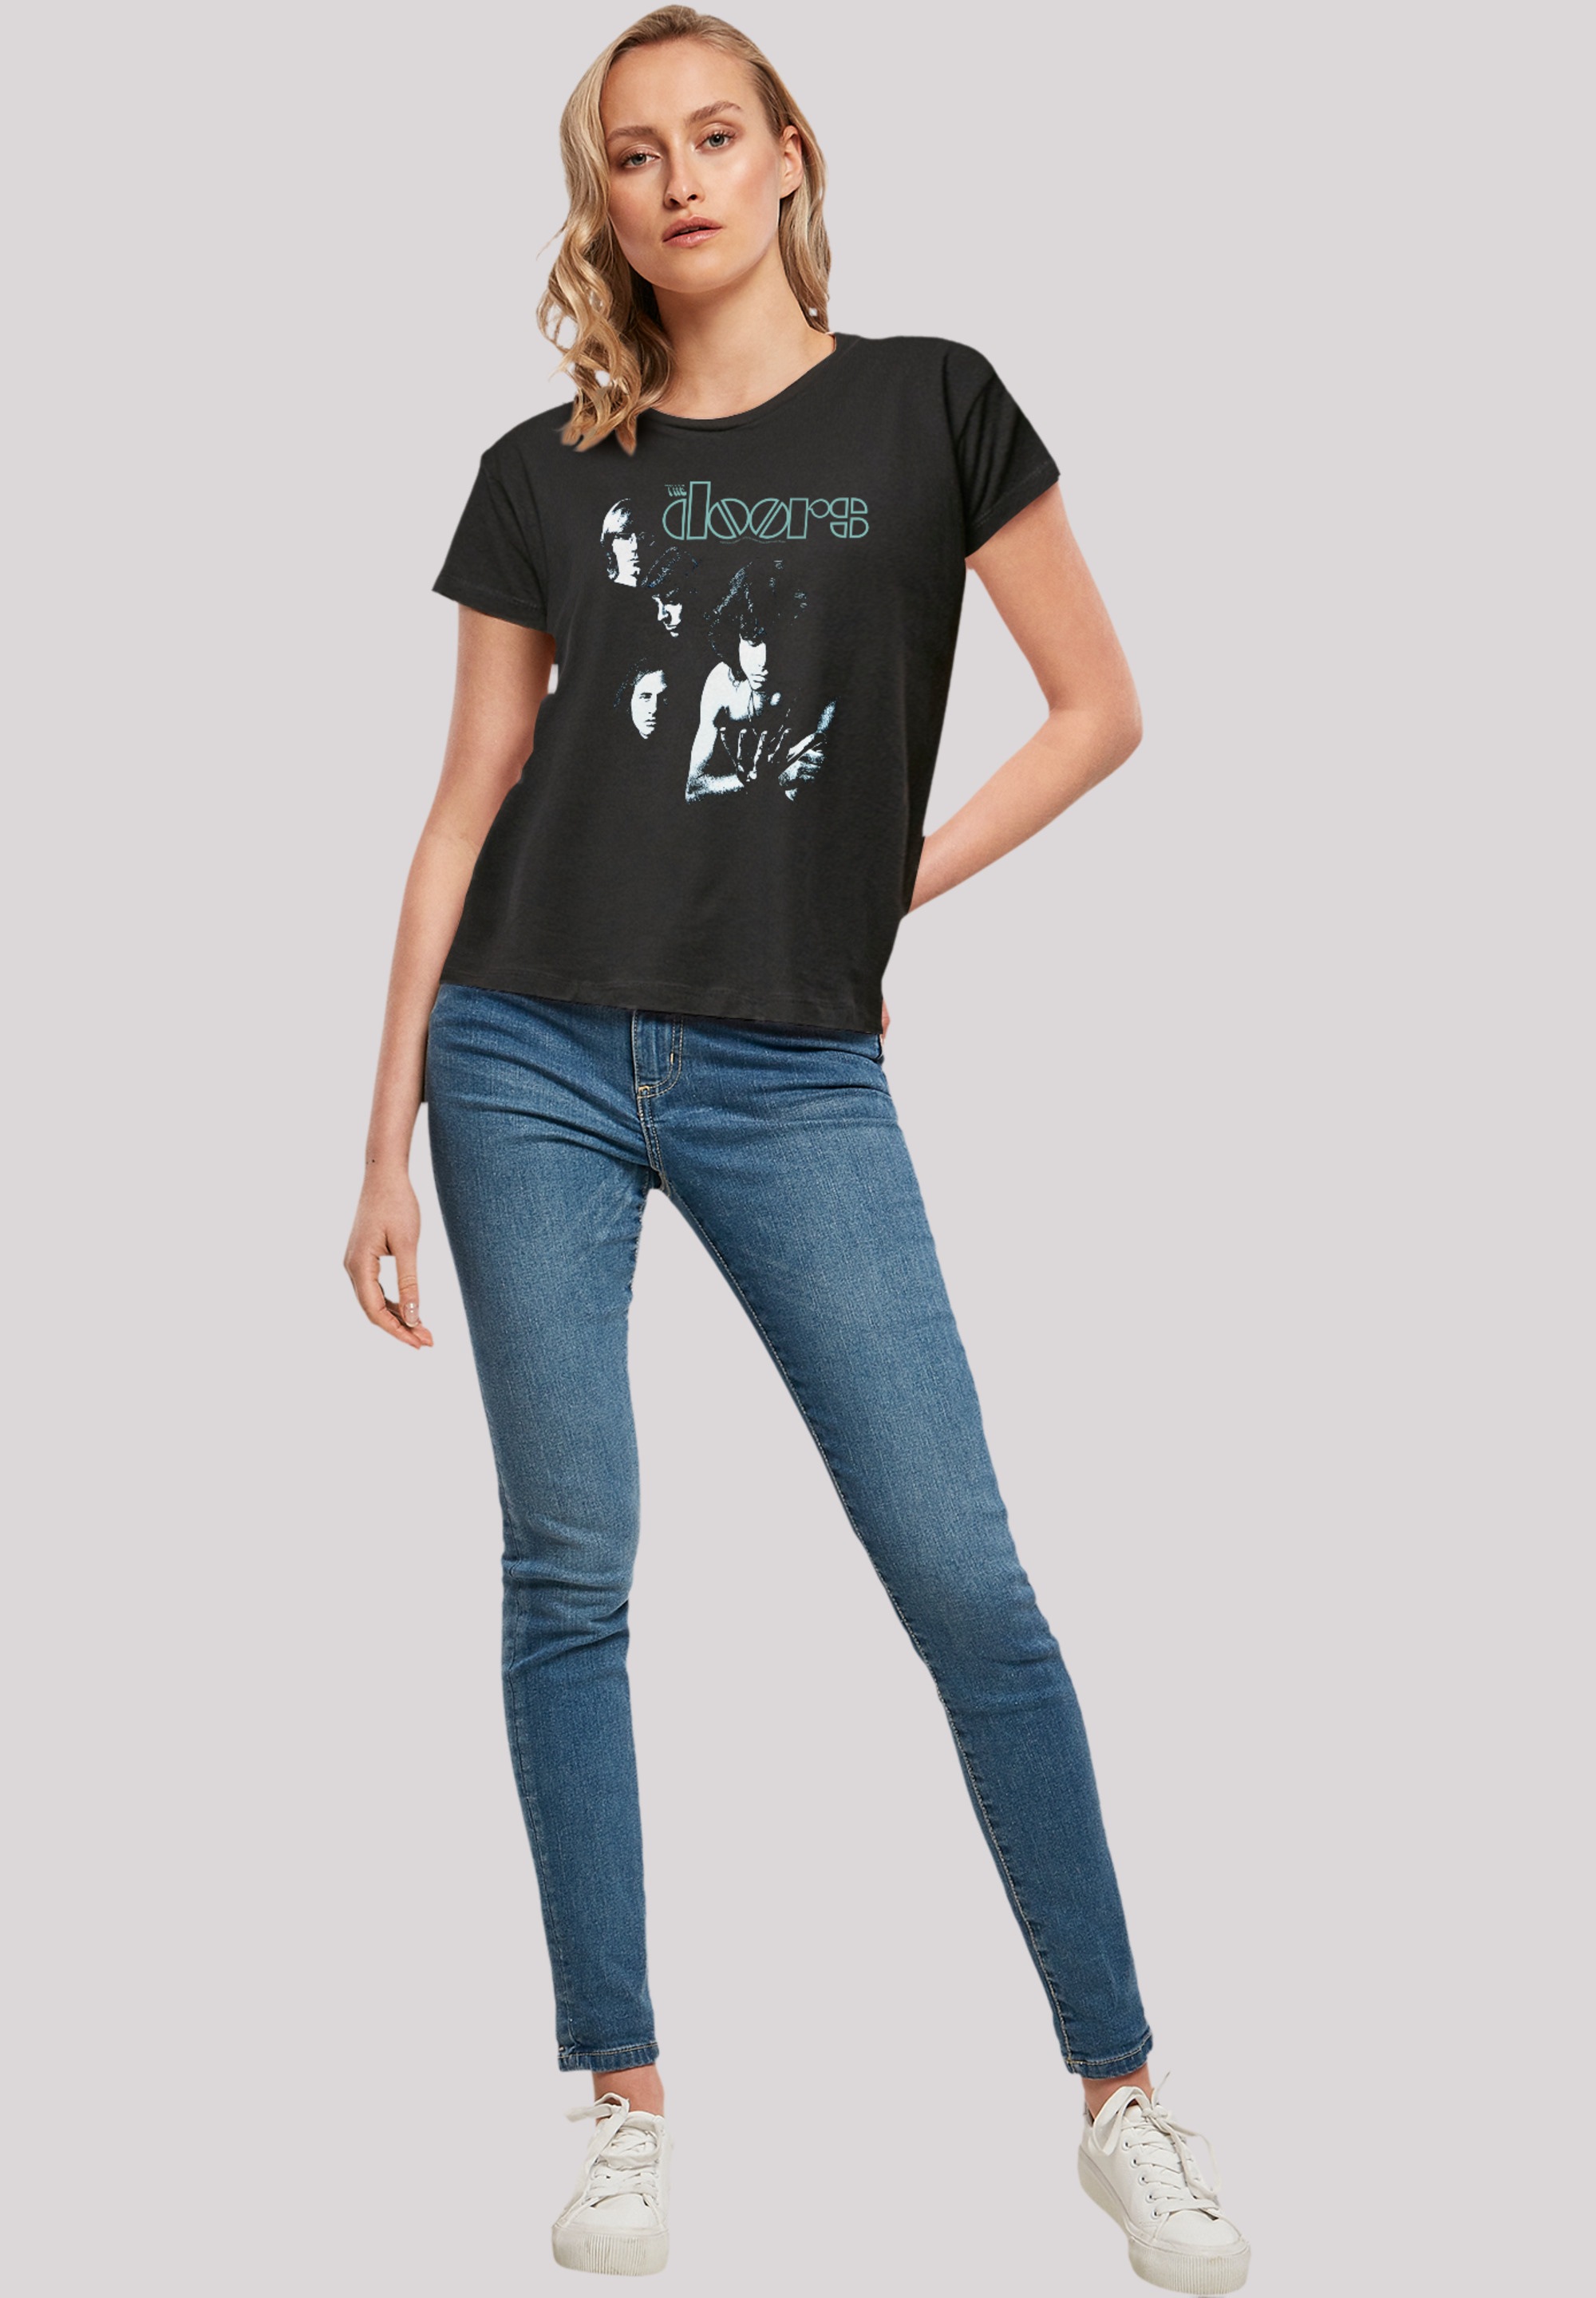 F4NT4STIC T-Shirt »The Doors Music Light And Shadow«, Musik, Band, Logo |  I'm walking